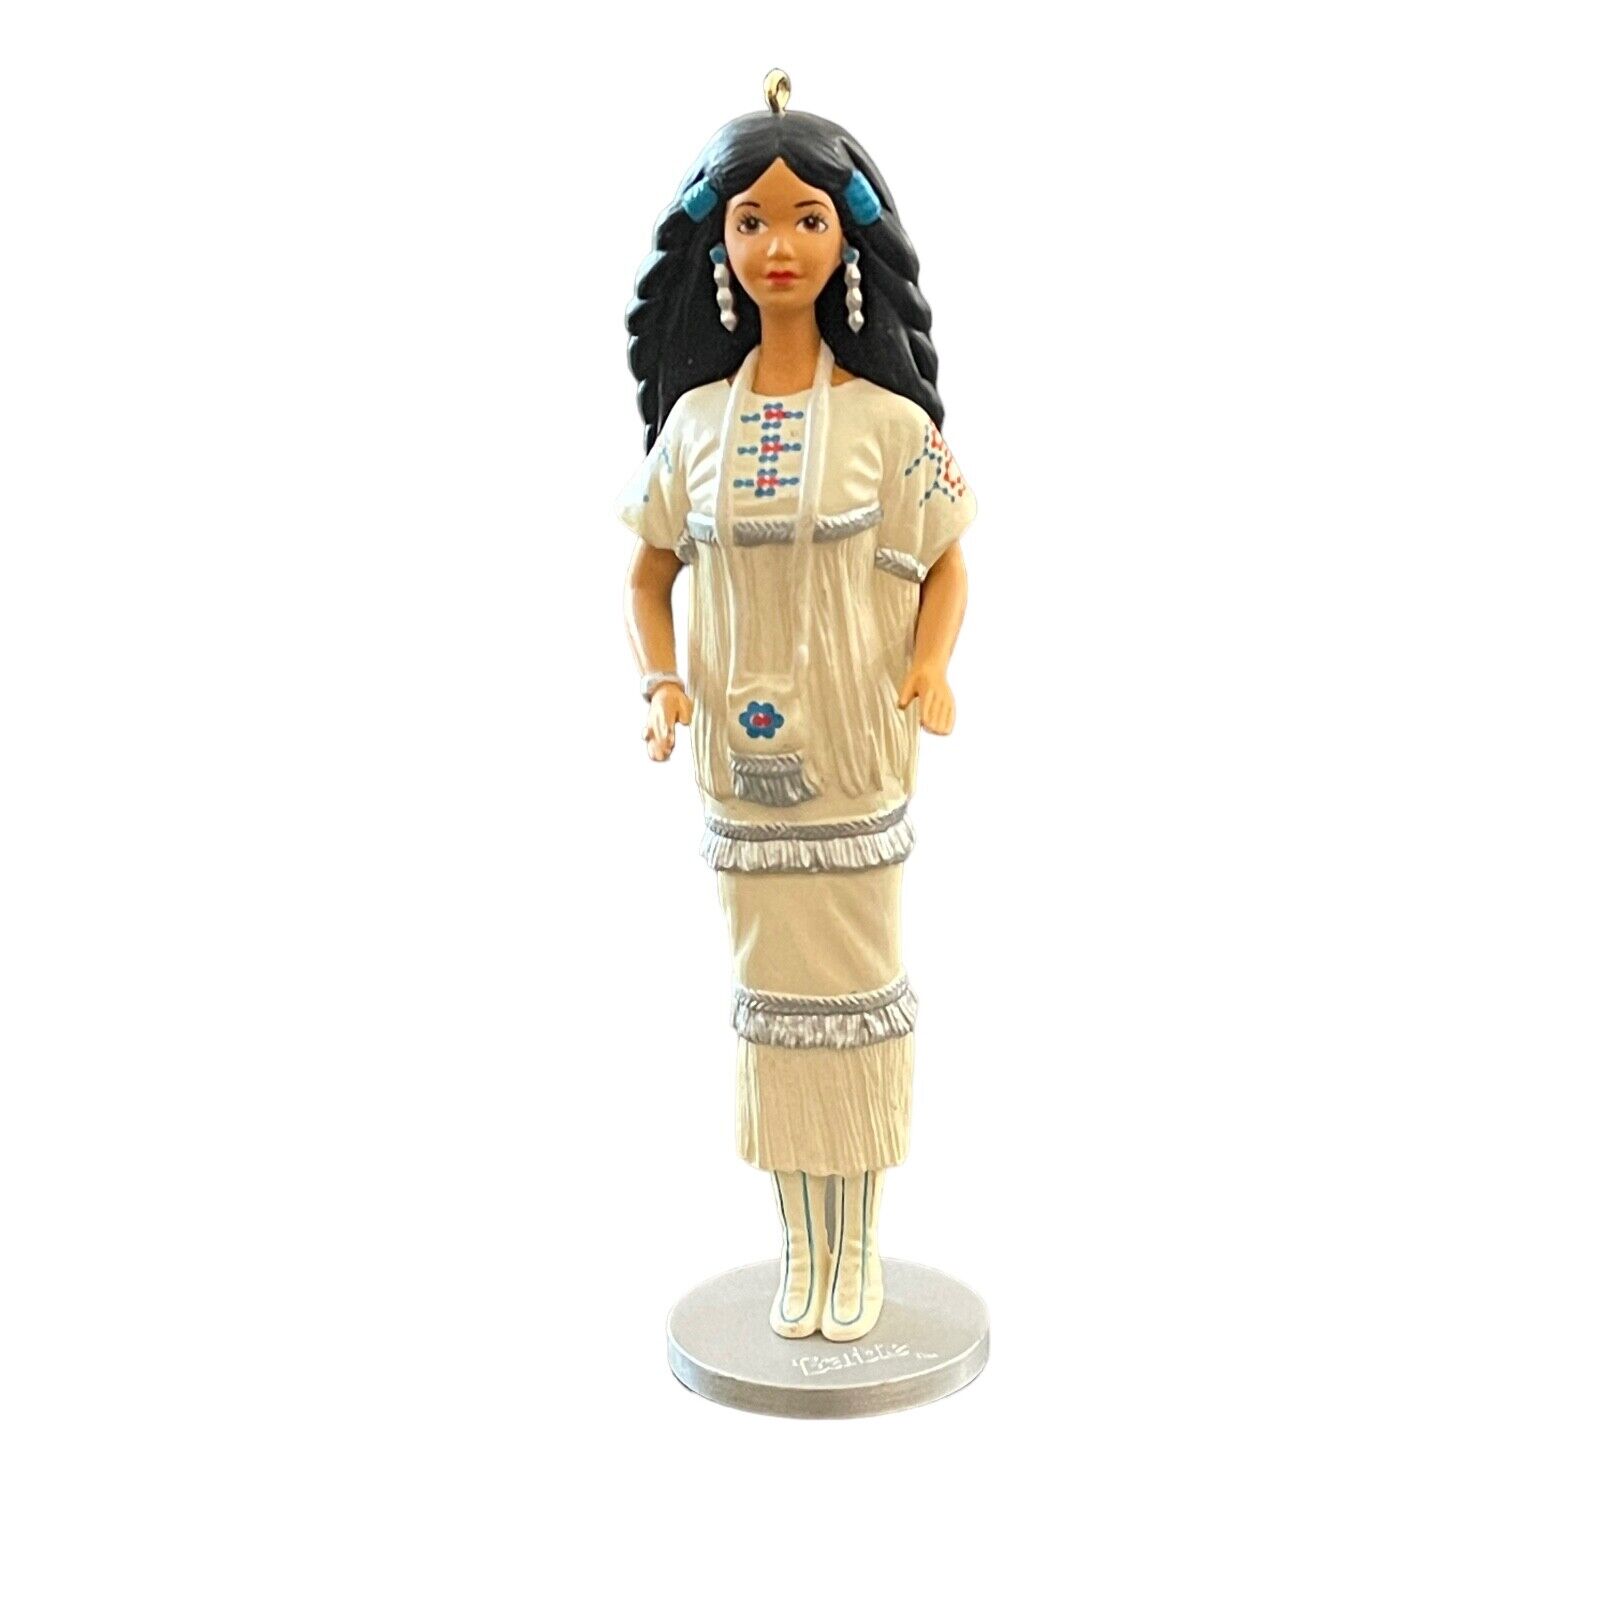 Vintage Hallmark NativeAmerican Barbie Doll Ornament 1996 Mattel 90s